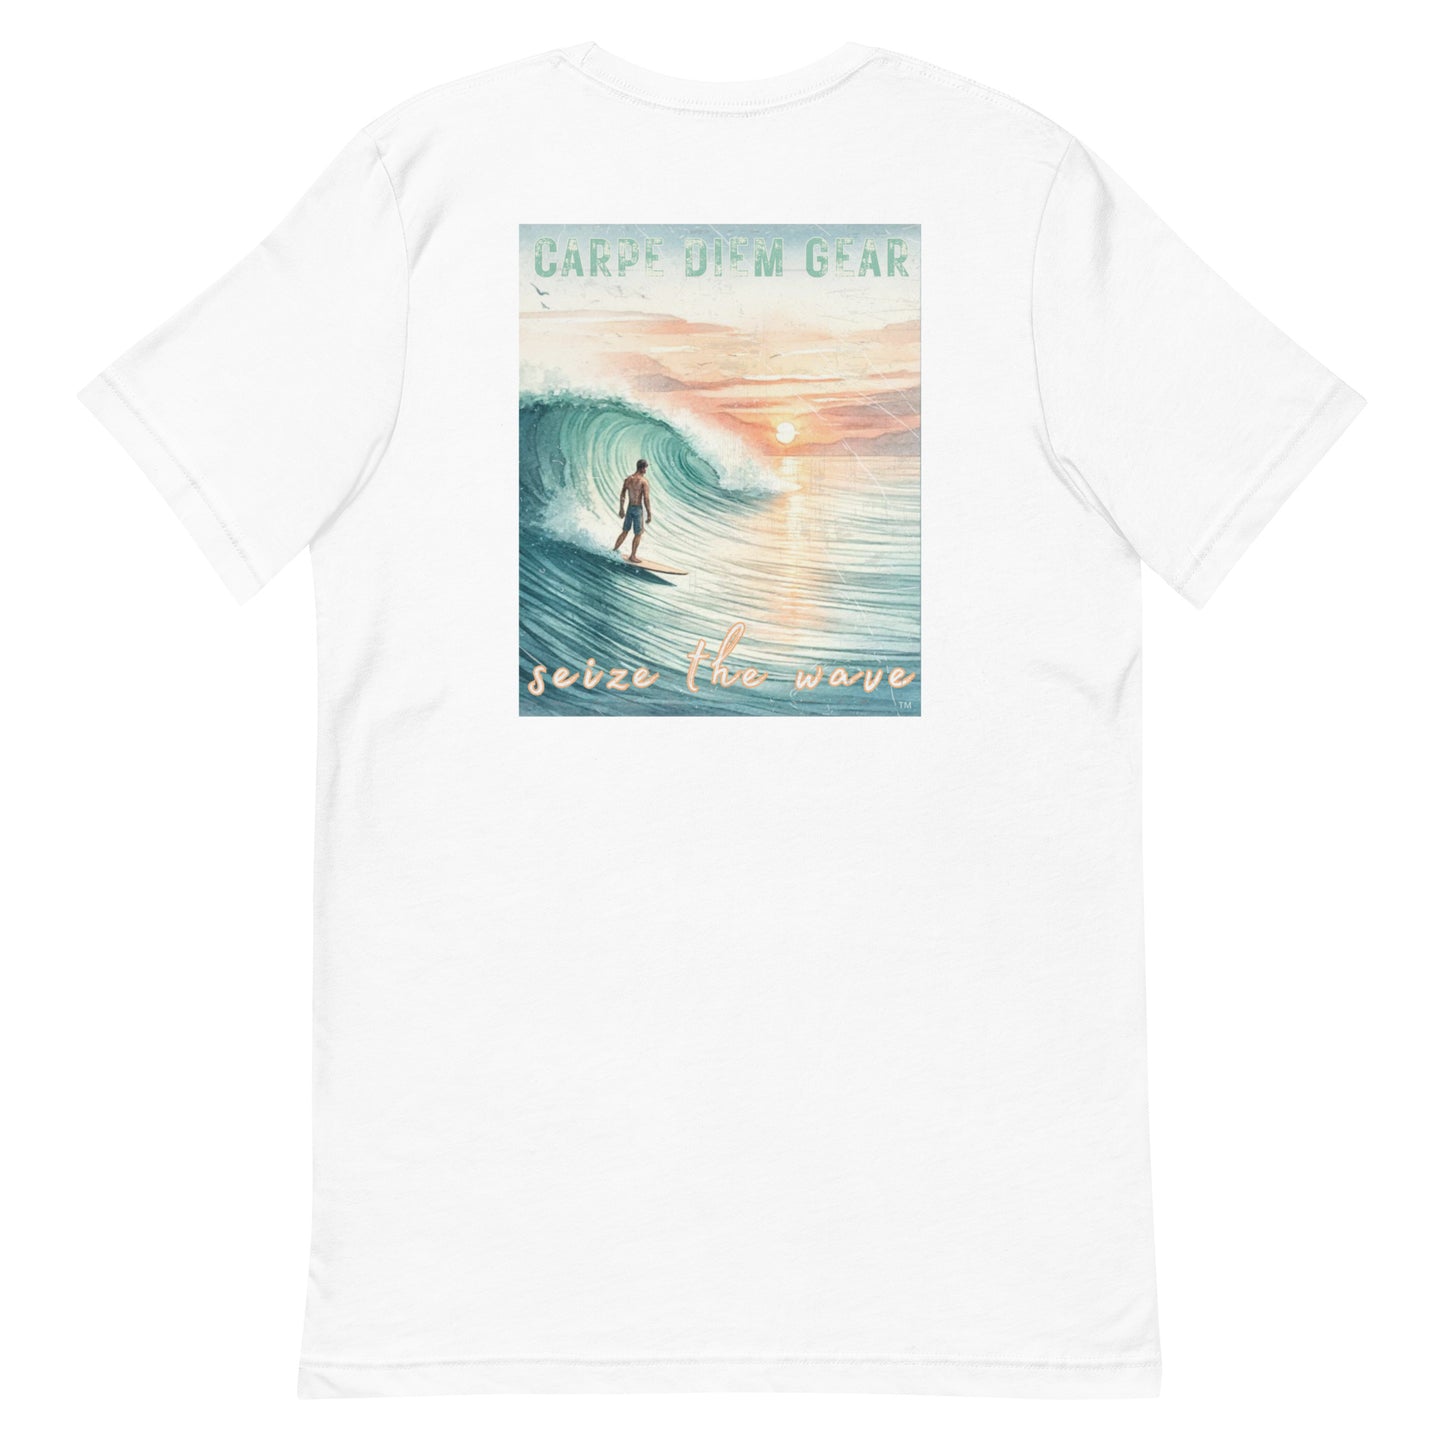 Carpe Diem Gear | Surf's Up | Watercolor Longboard Surfing Vert | Unisex 100% Ring-Spun Cotton